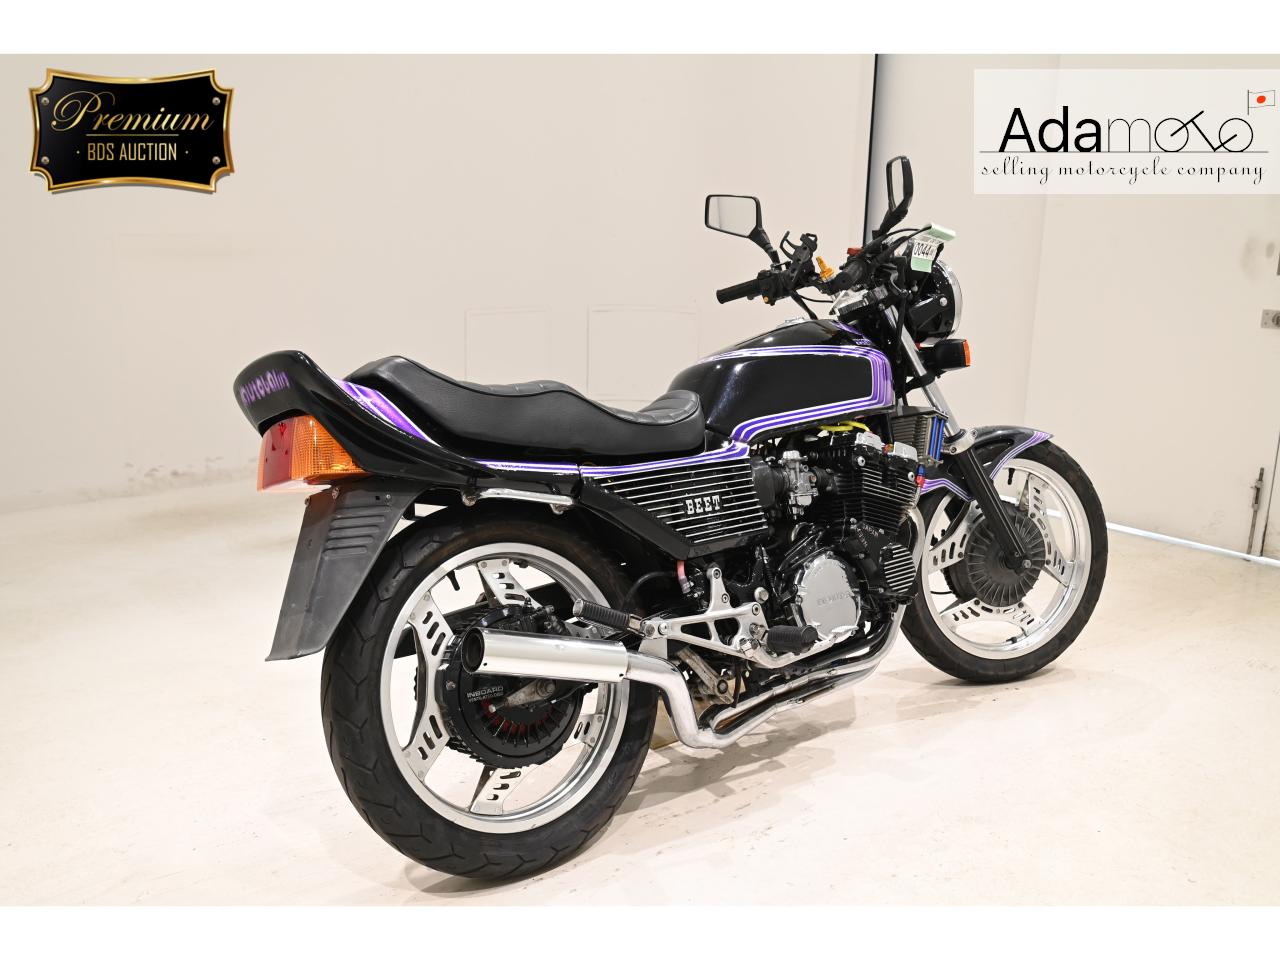 Honda CBX400F 1 - Adamoto - Motorcycles from Japan